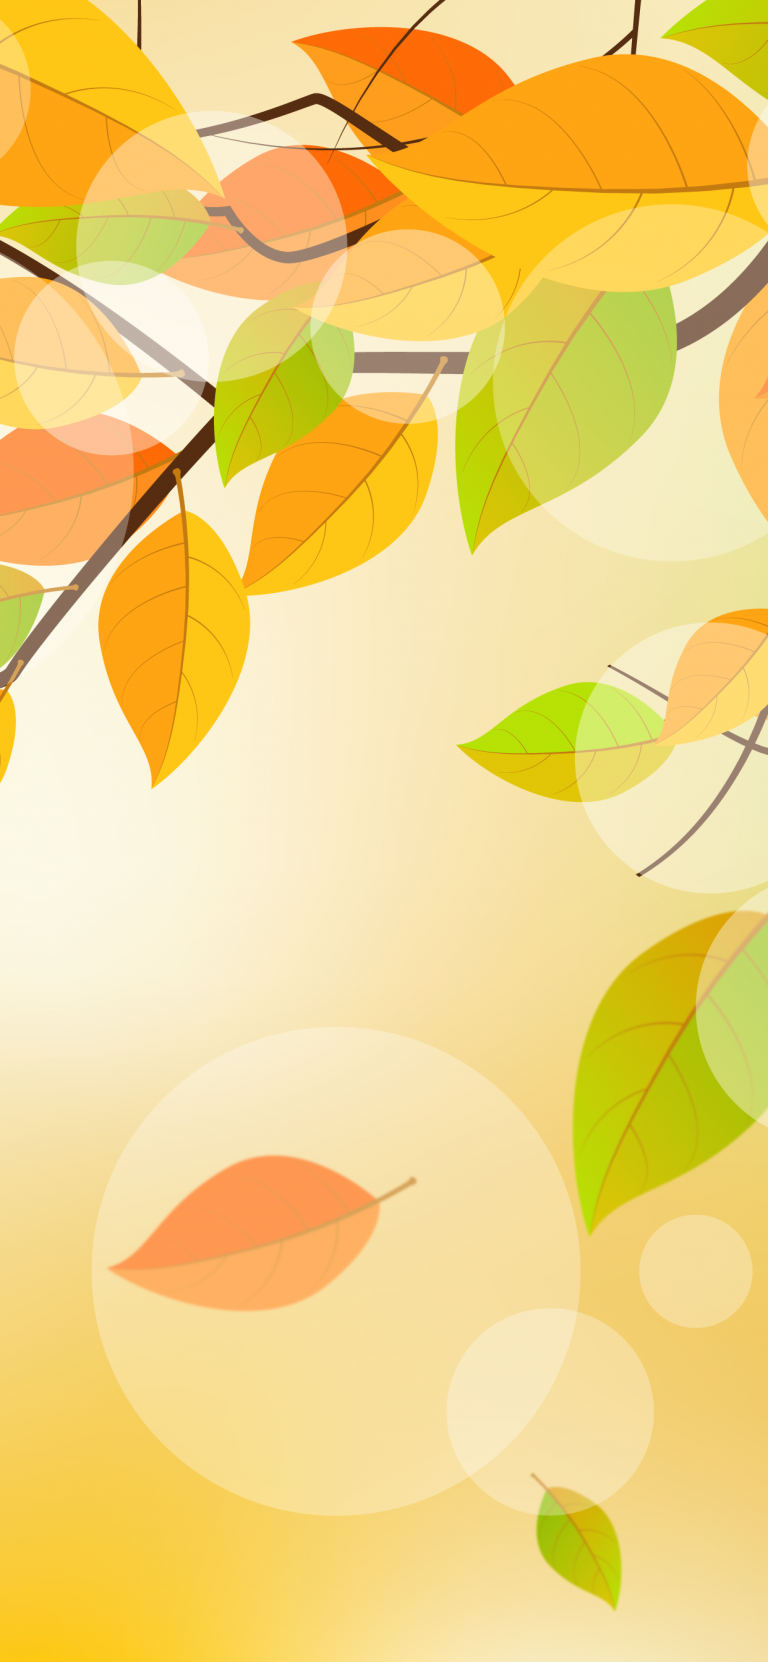 Autumn-for-iPhone-XS-Max-evgeniy-zemelko-768×1662